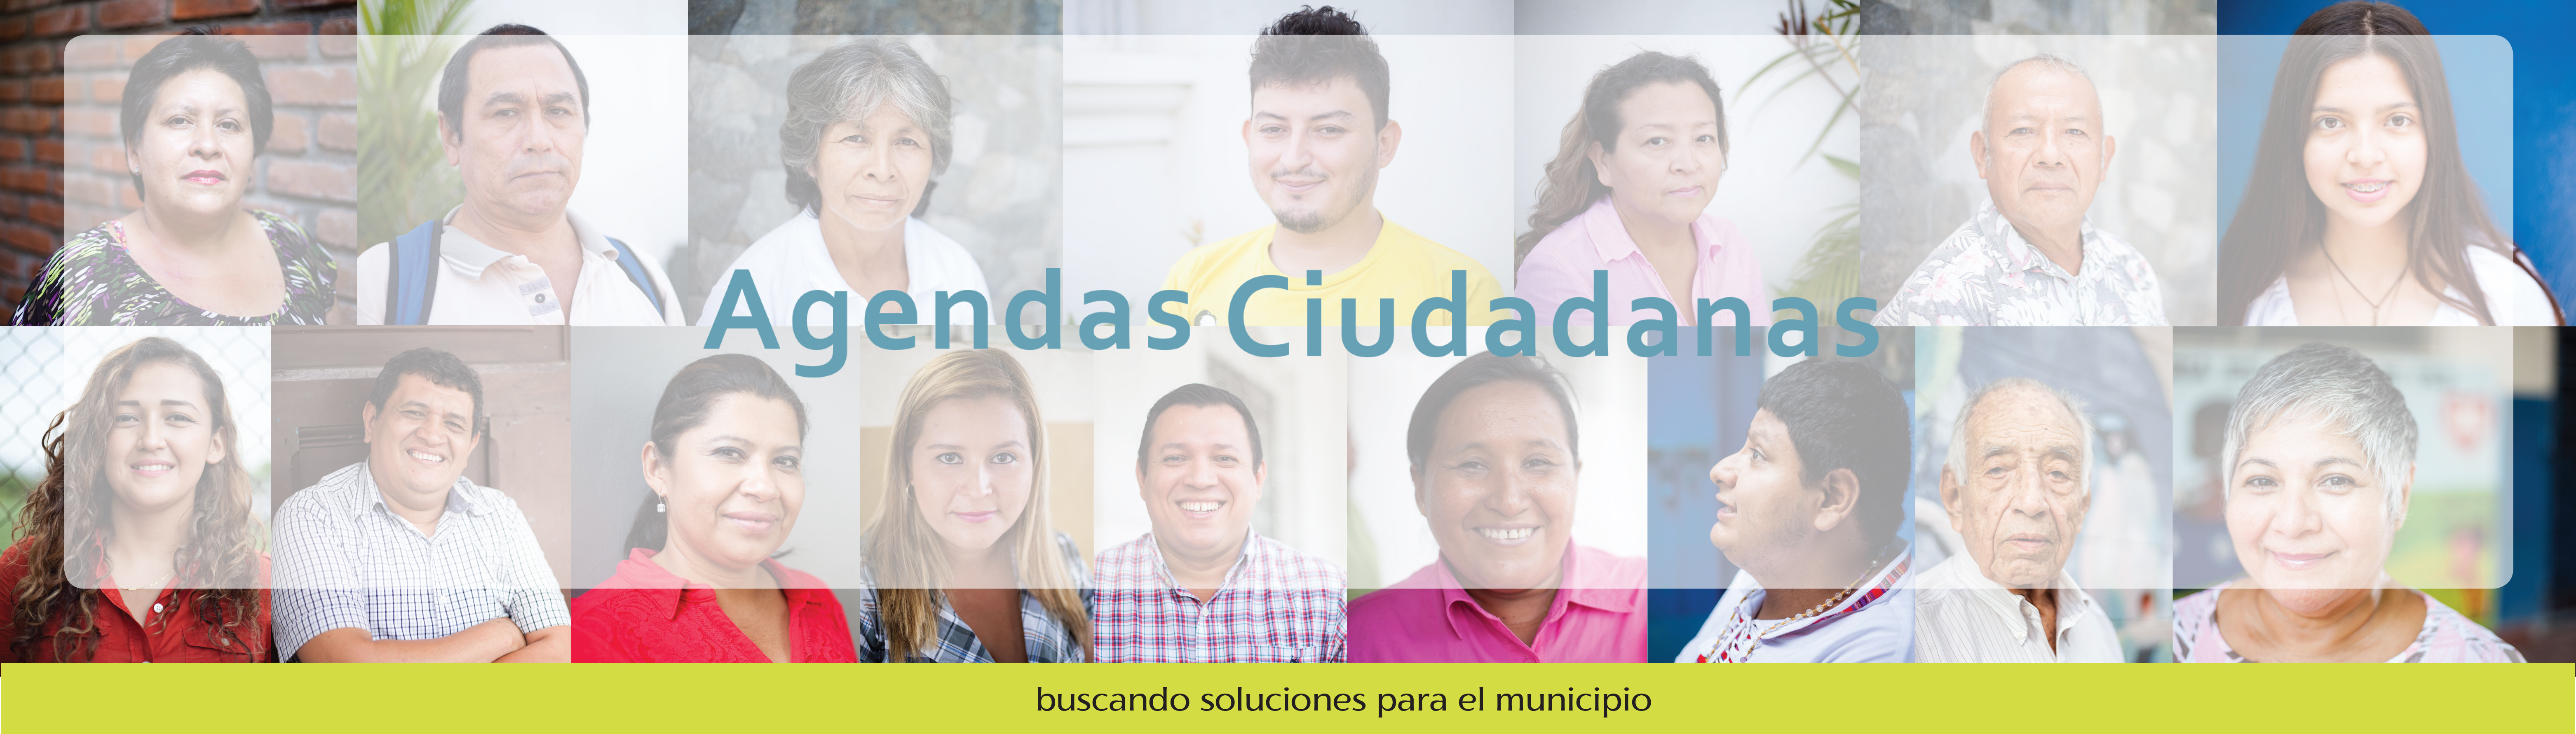 Banner_web_agendas_ciudadanas-3.jpg